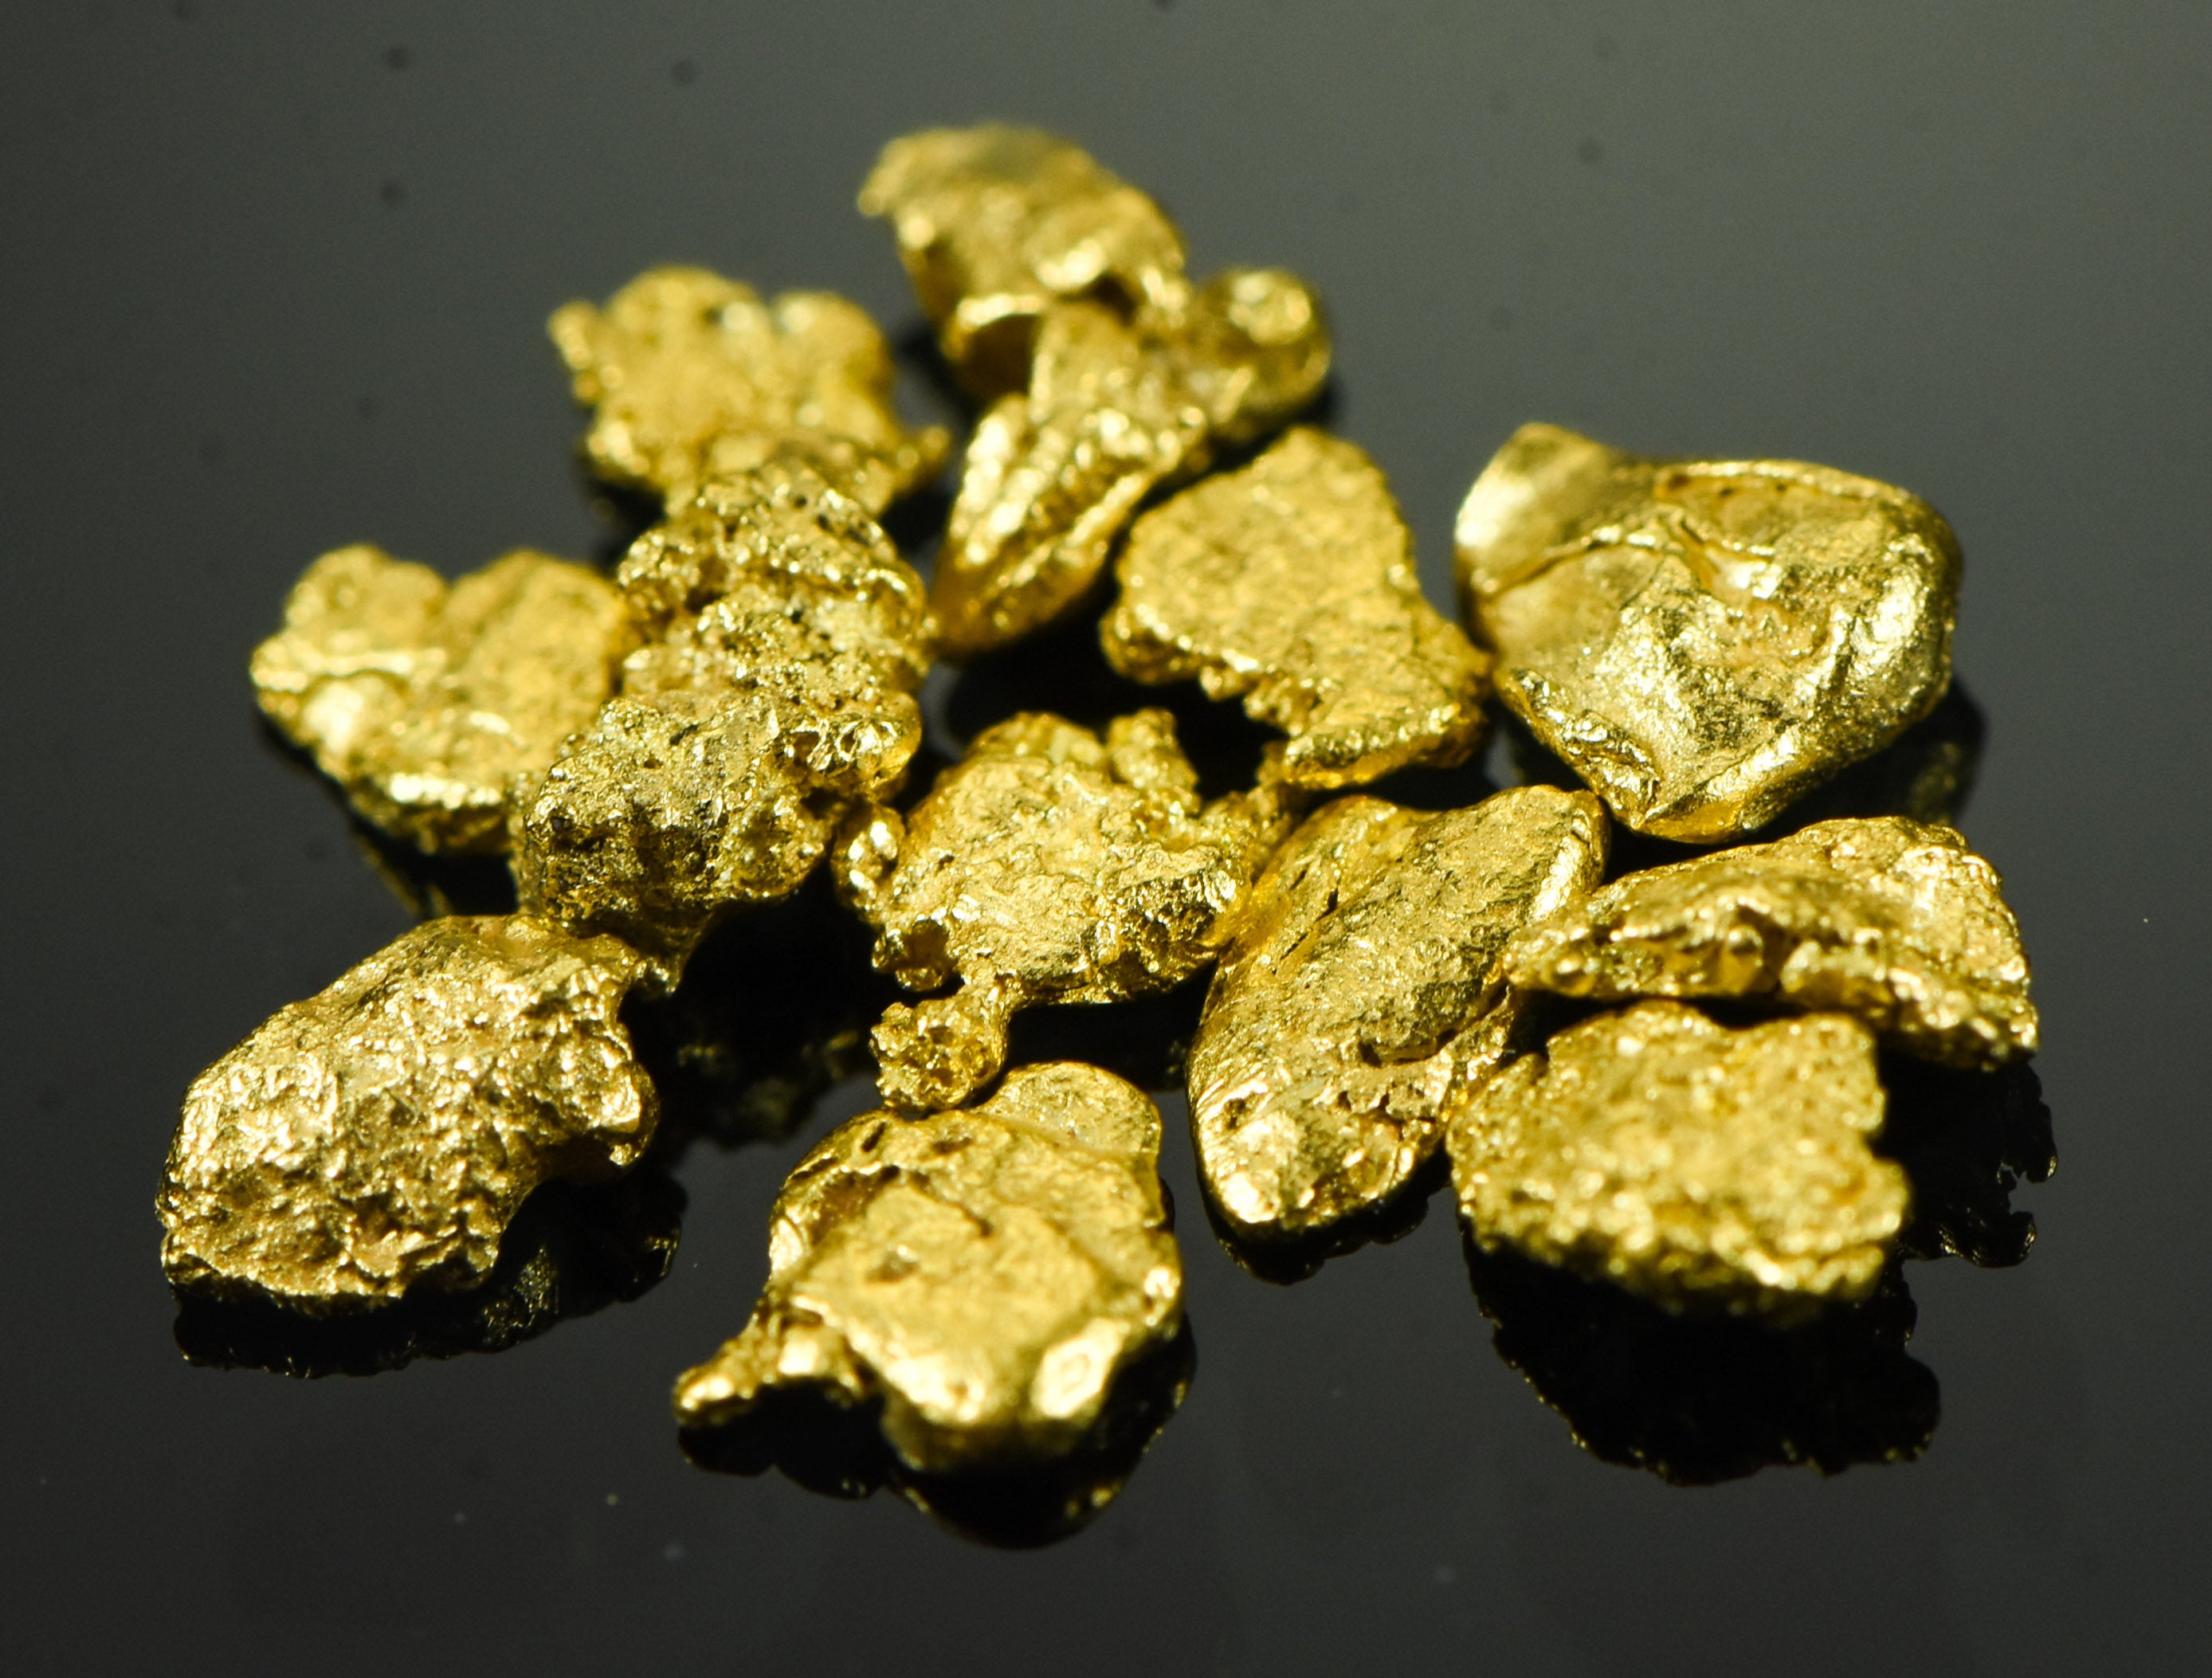 Alaskan Yukon Gold Rush Nuggets #8 Mesh 1.55 Gram of Fines